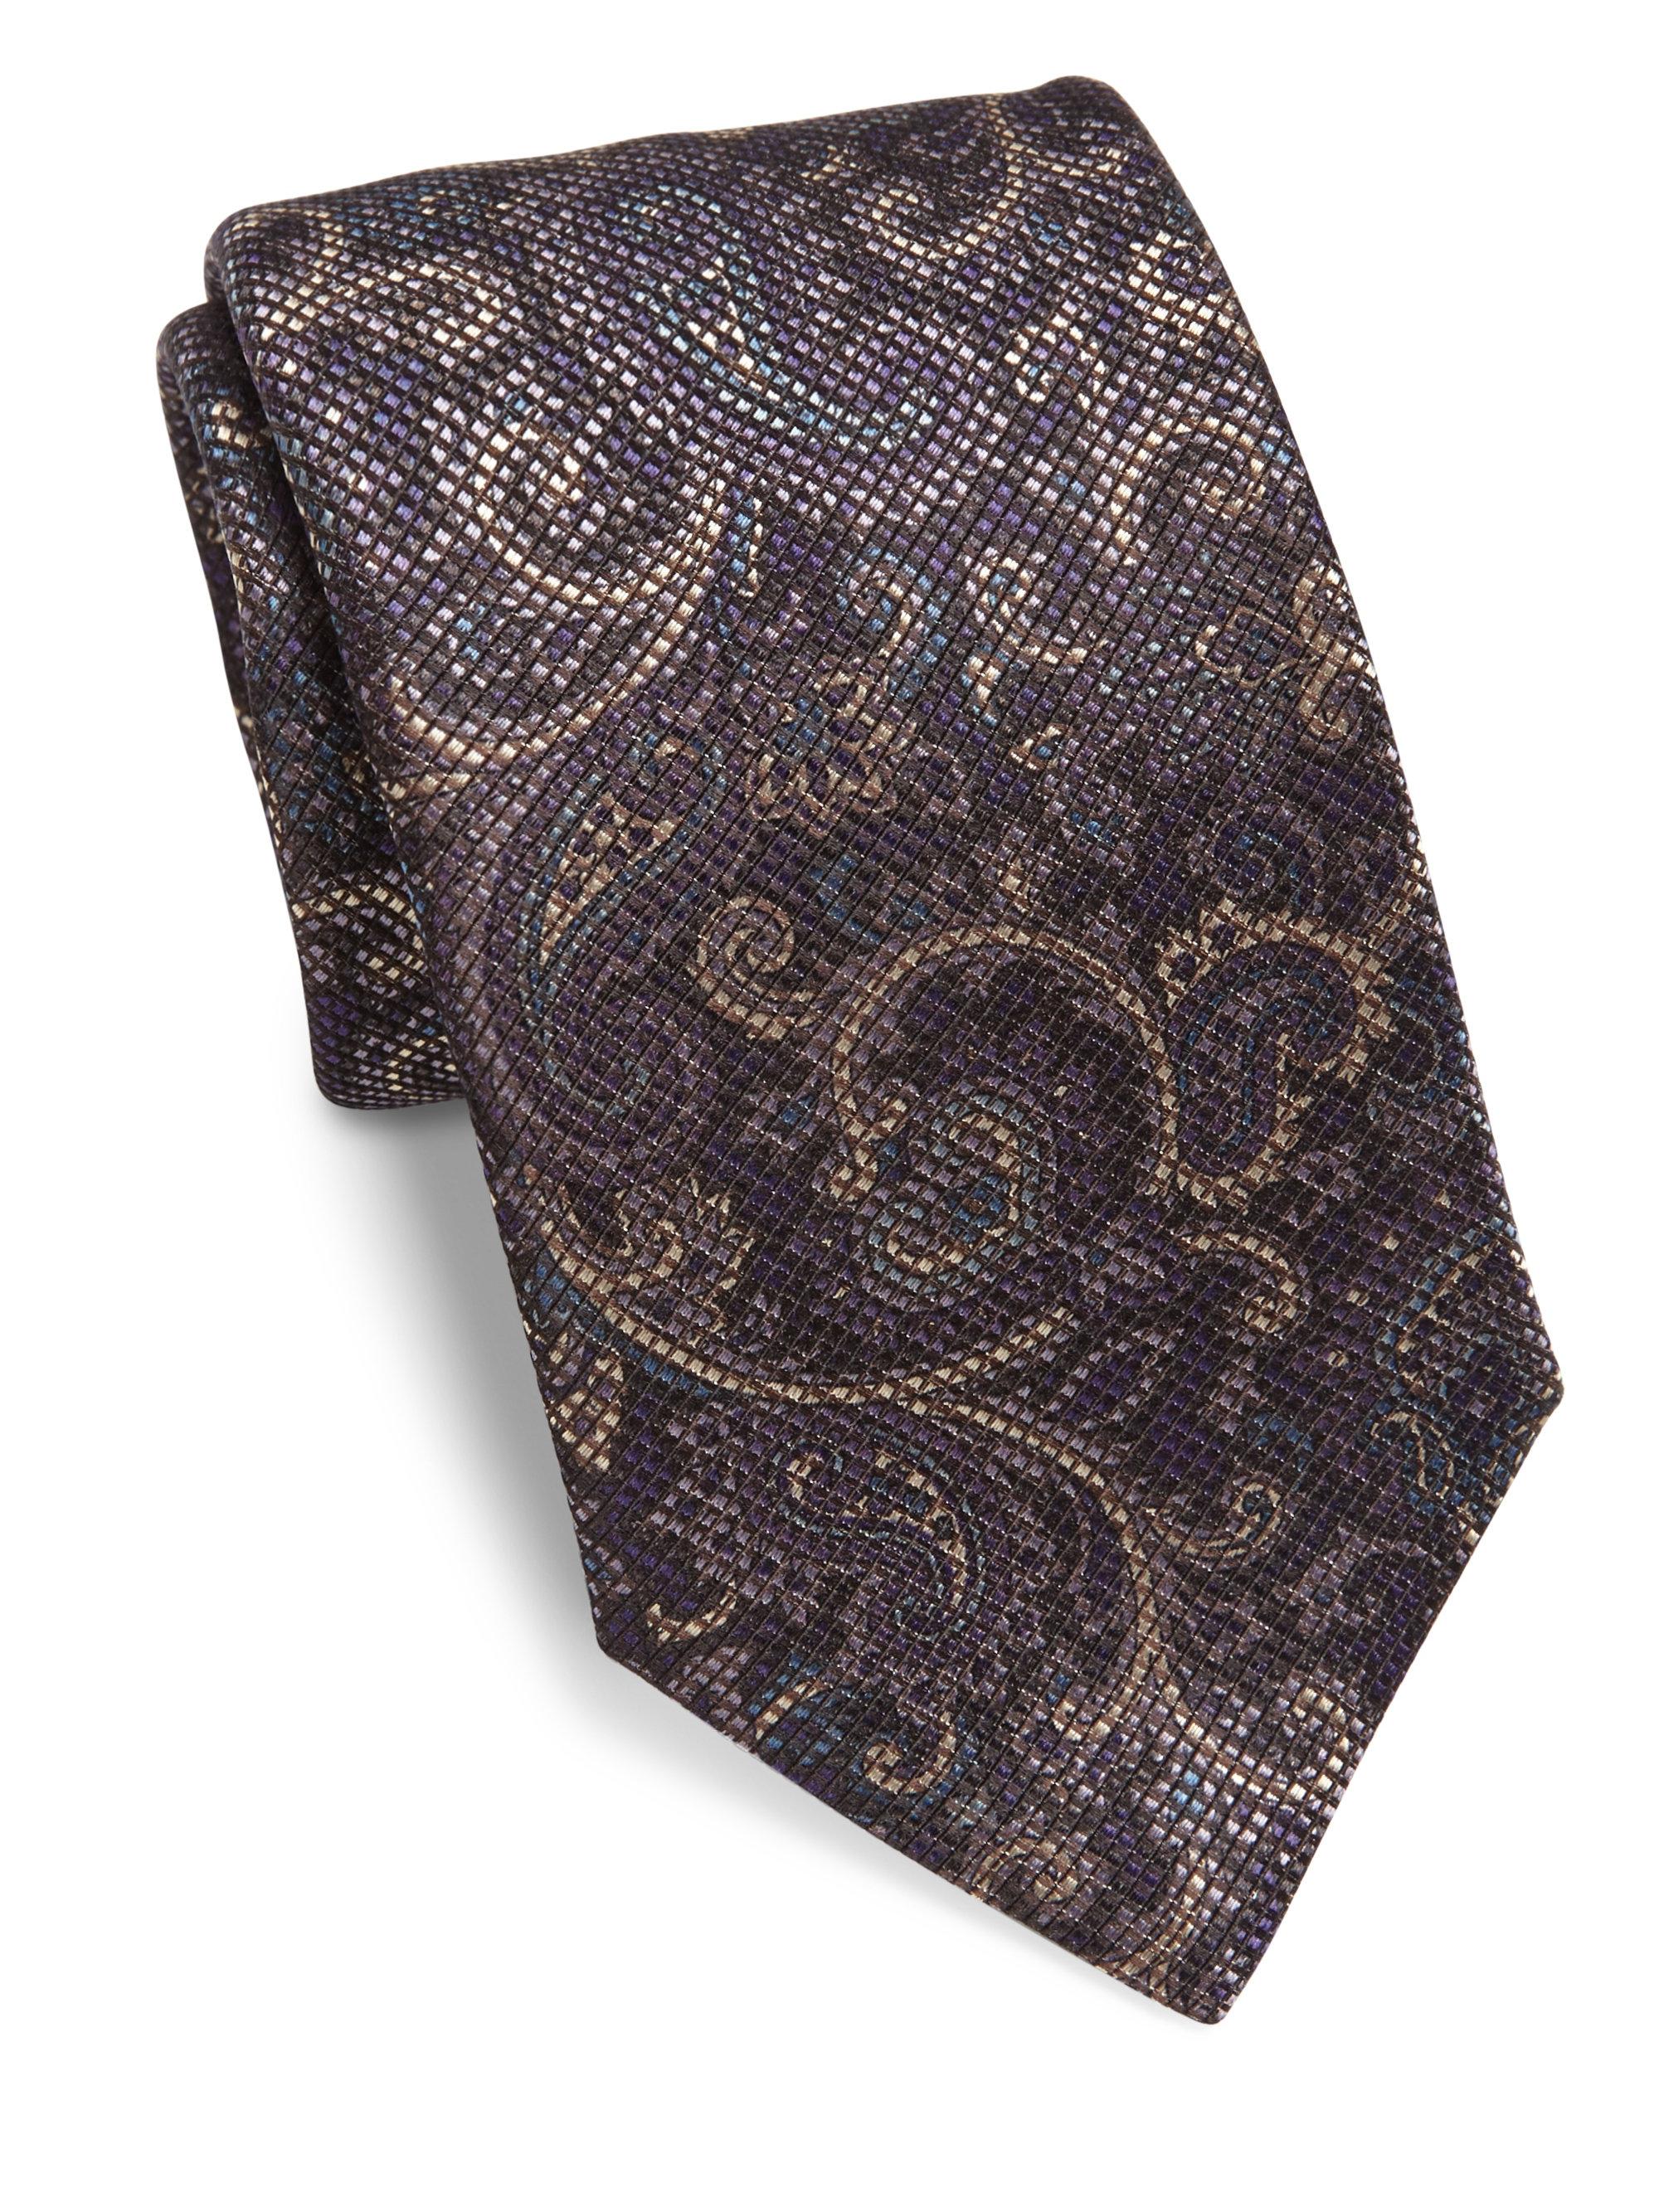 Lyst - Saks Fifth Avenue Antique Pai Silk Tie in Black for Men